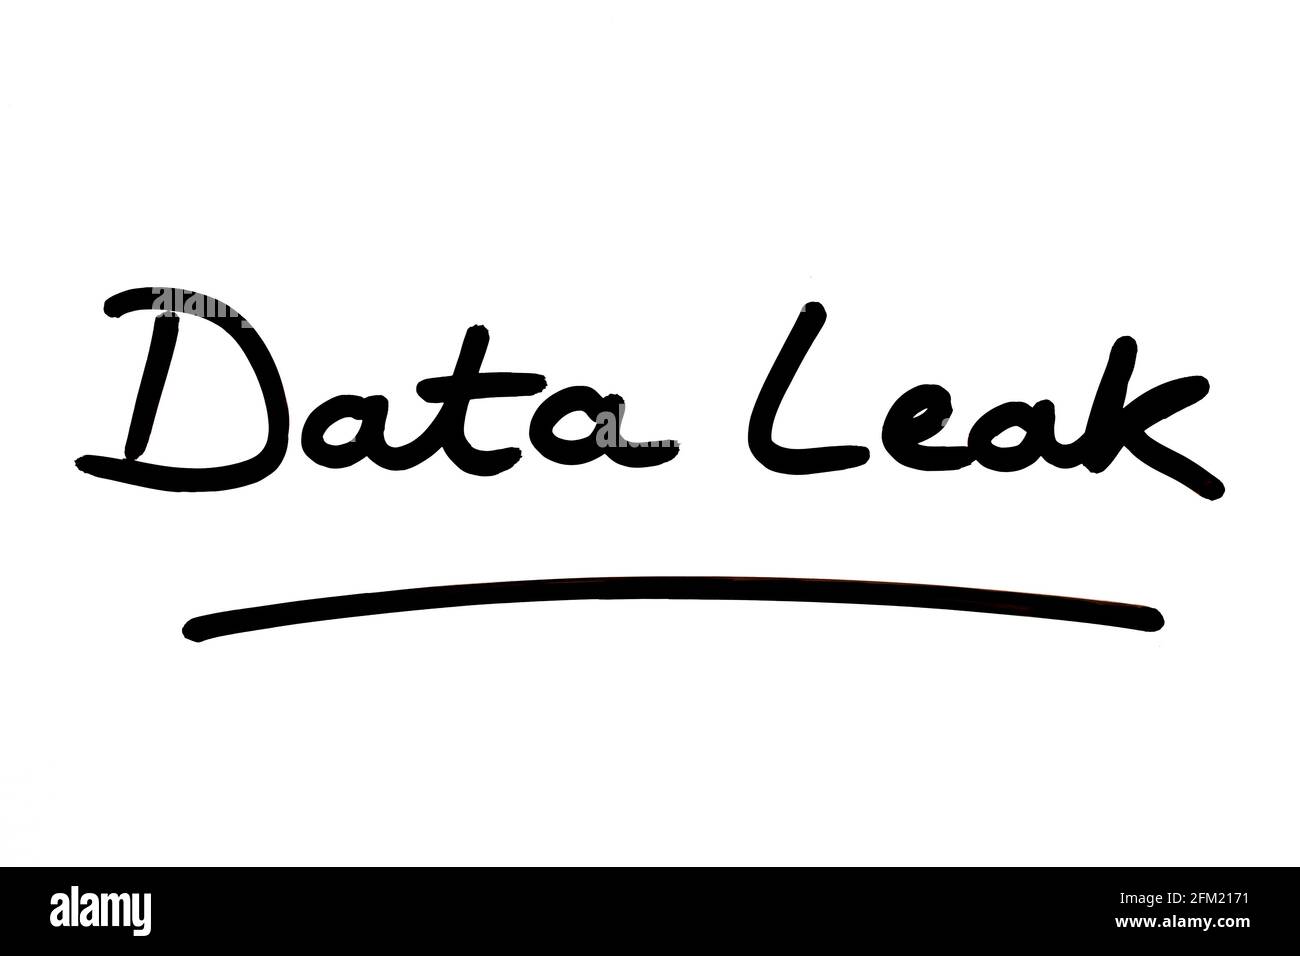 Data Leak, handwritten on a white background. Stock Photo